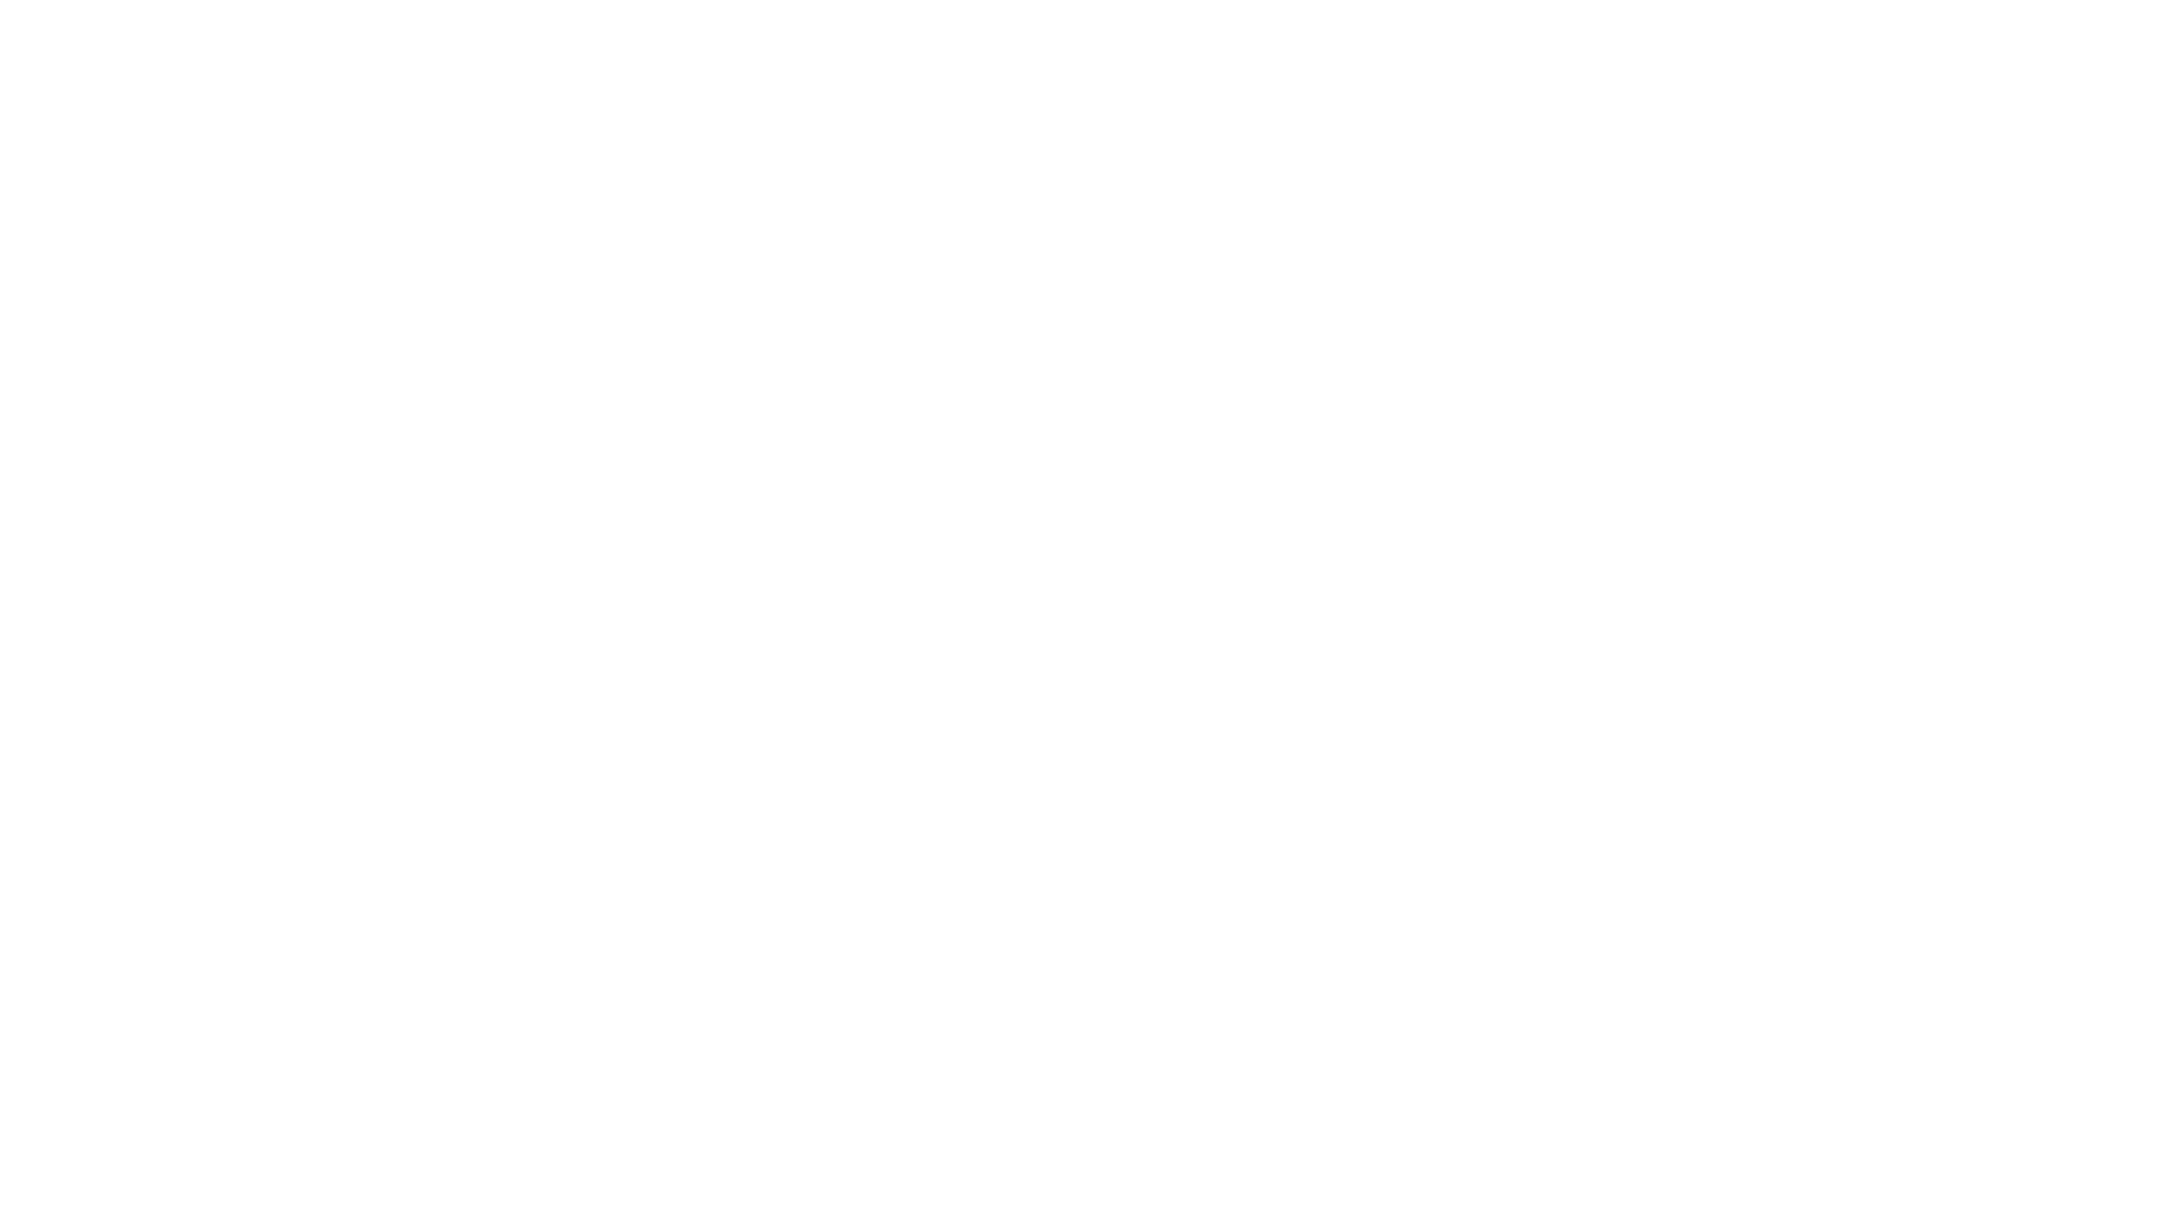 Off Shore Resort